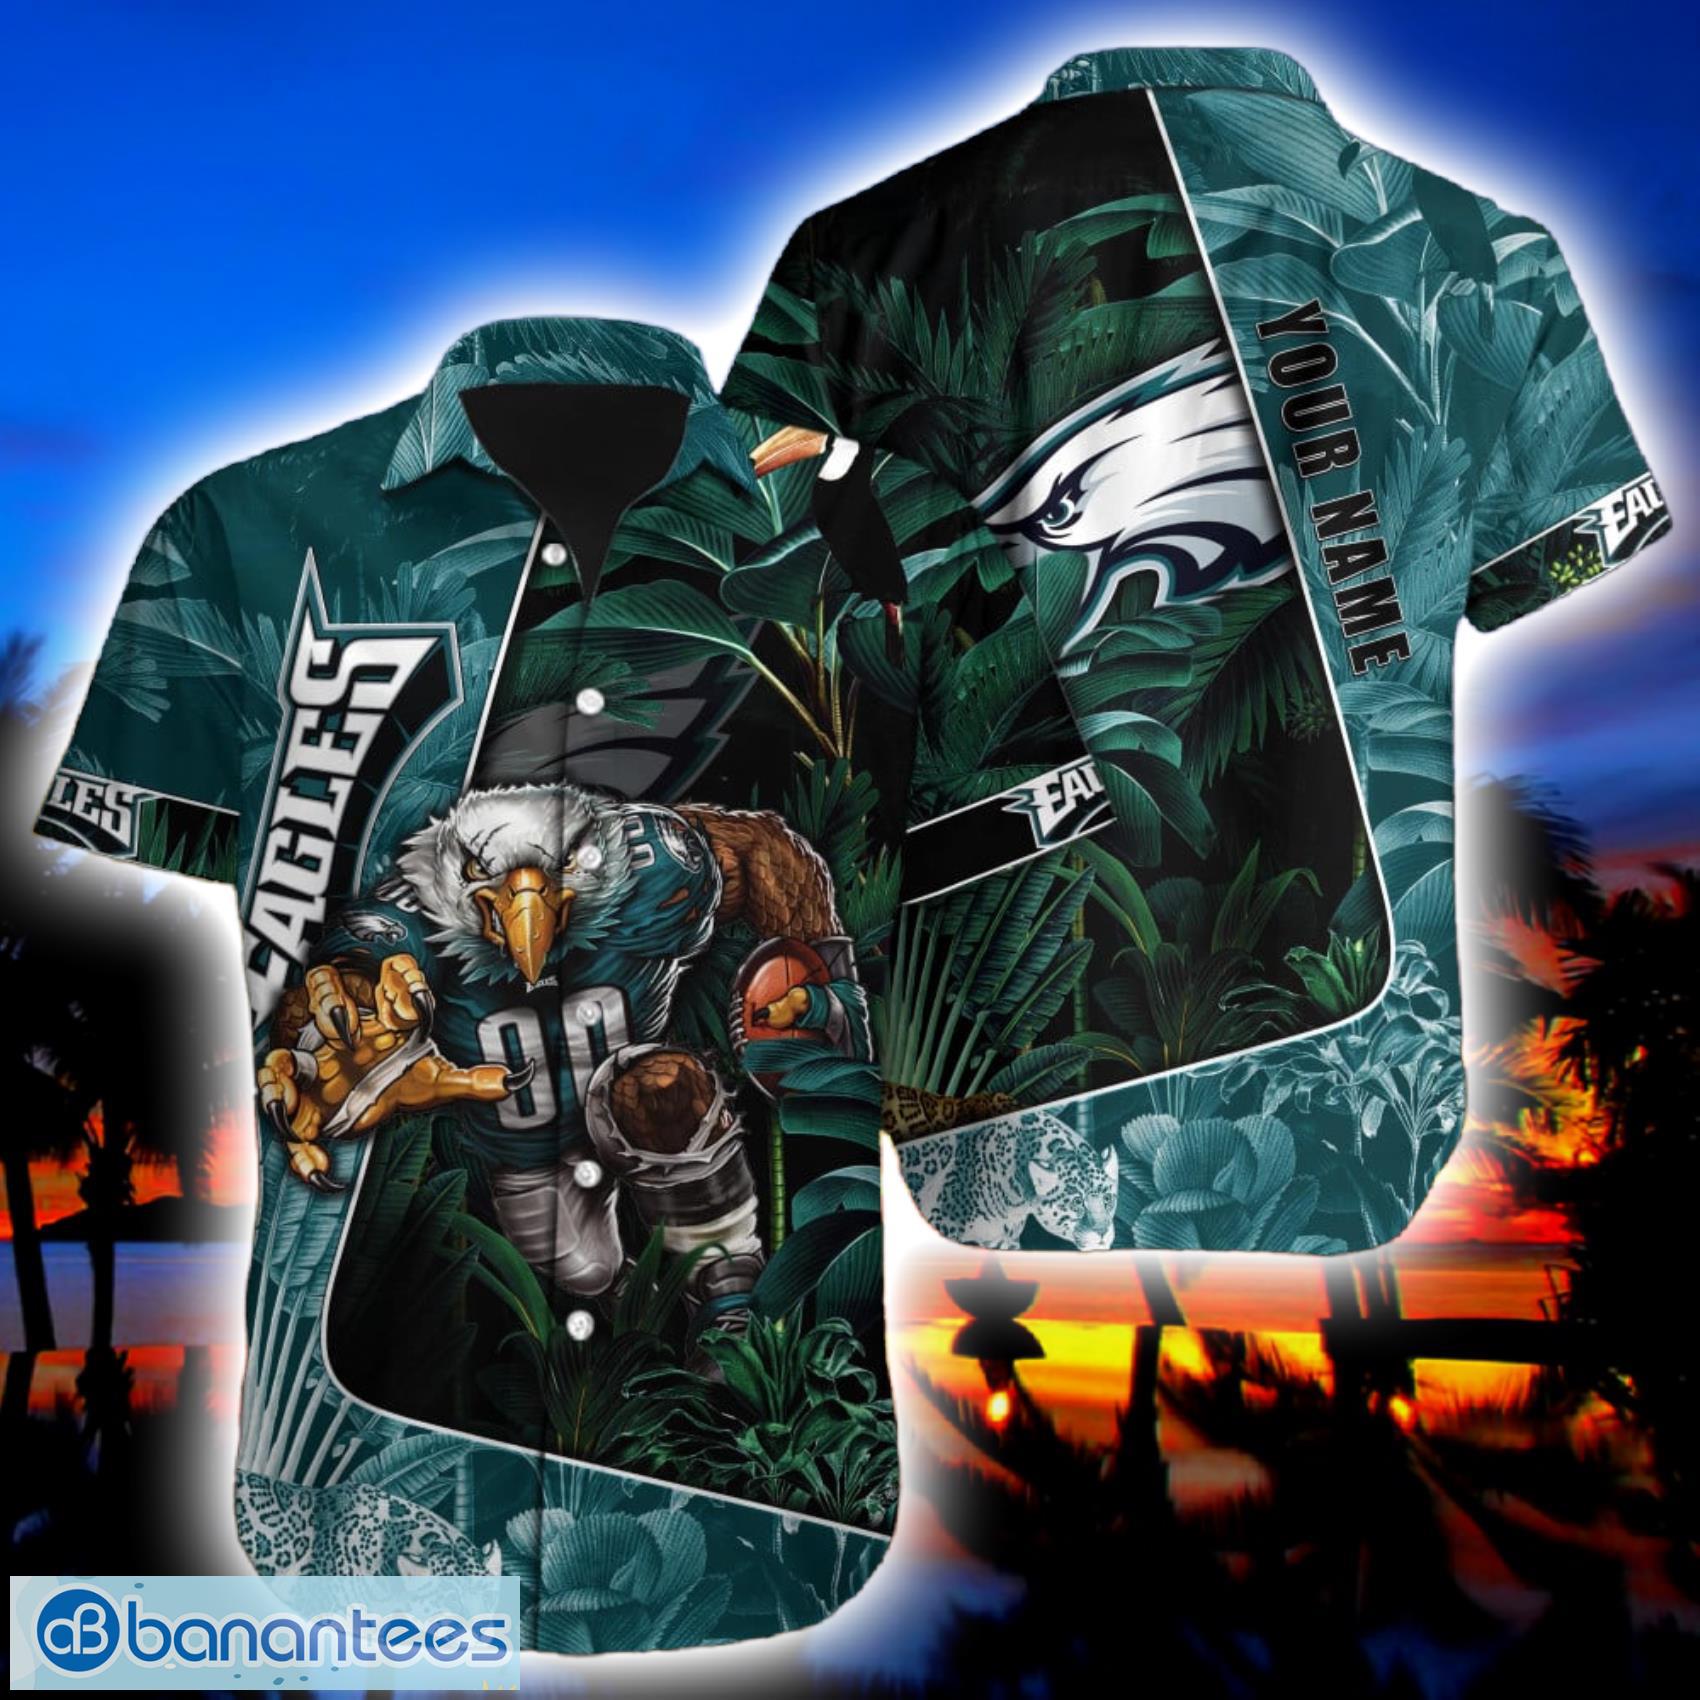 Philadelphia Eagles Retro Mascot Fan Design Shirt